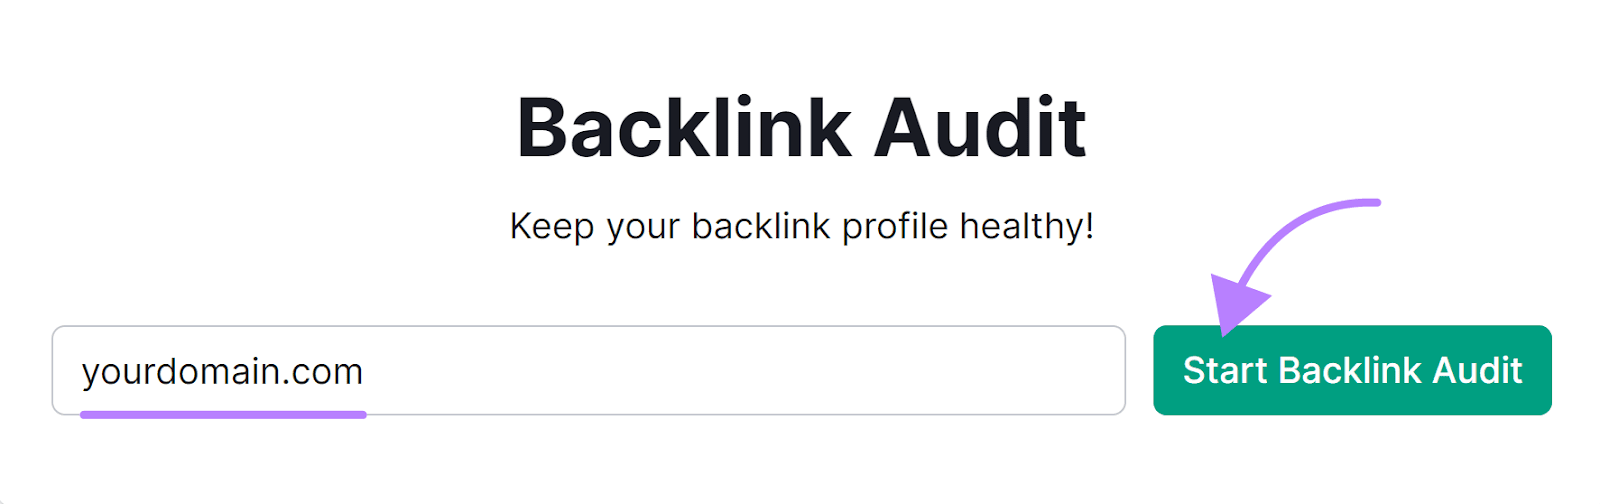 Backlink Audit tool search bar